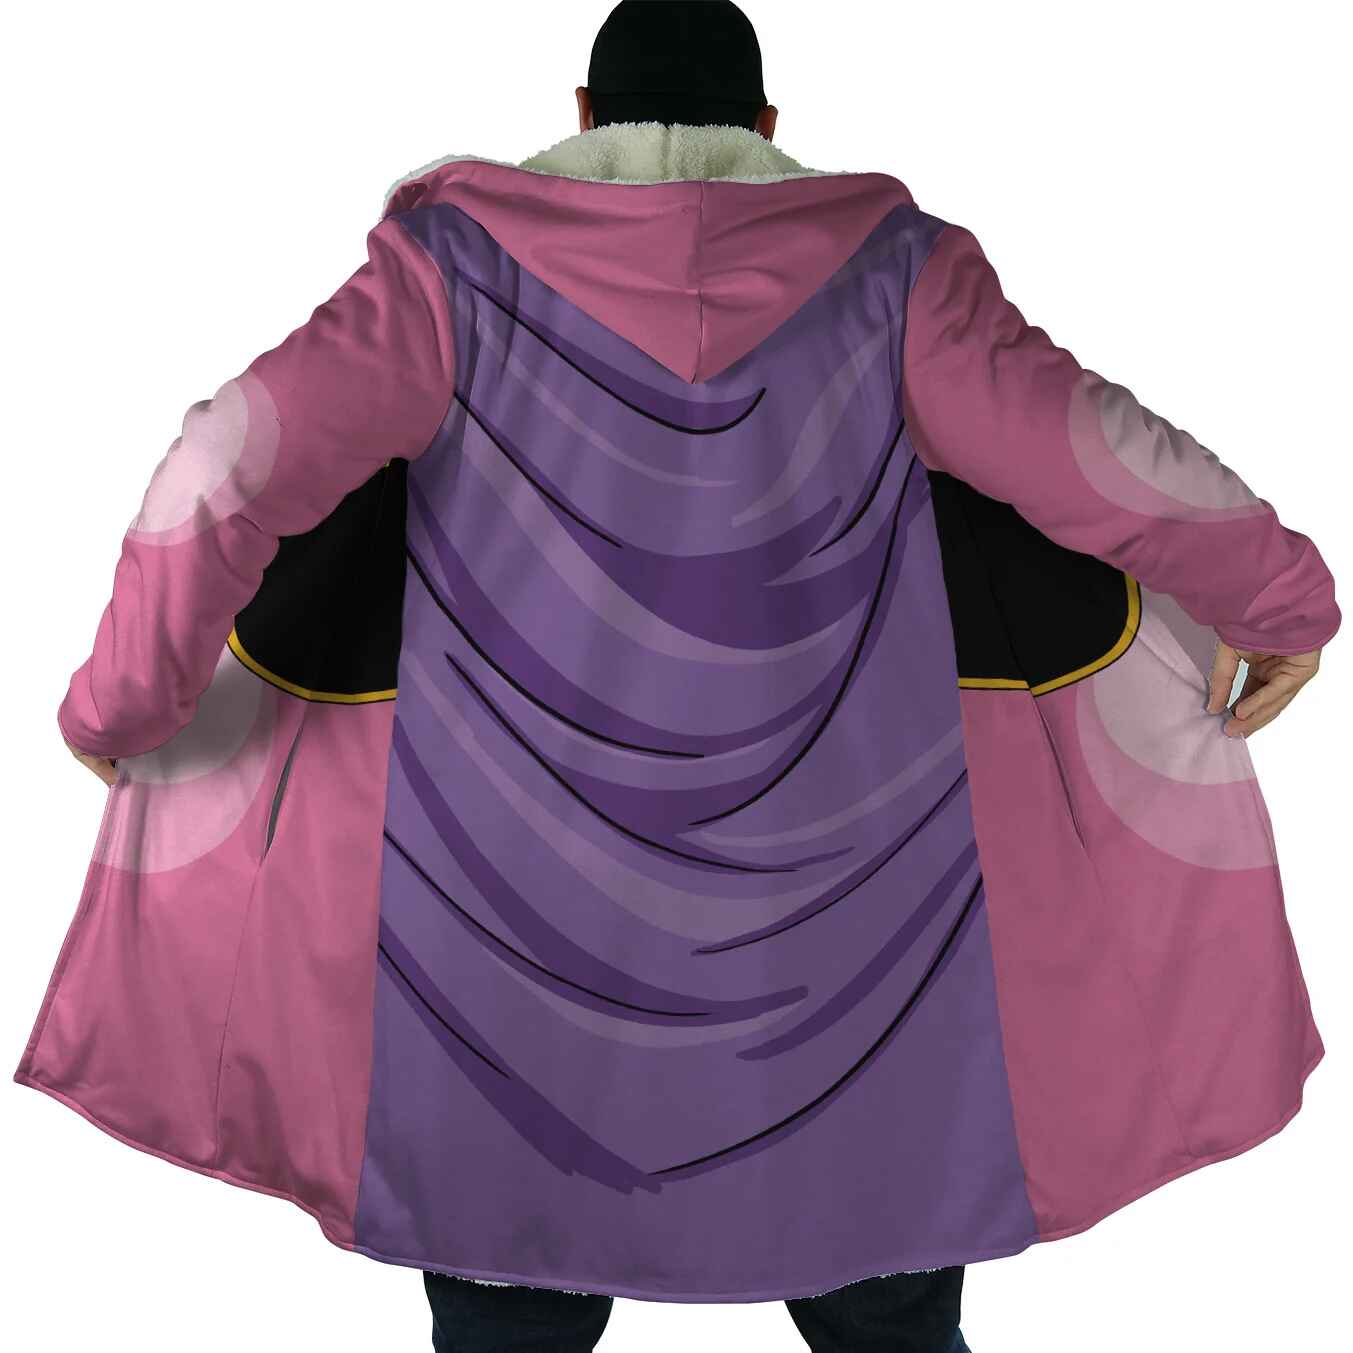 Majin Buu Classic Dragon Ball Hooded Cloak Coat